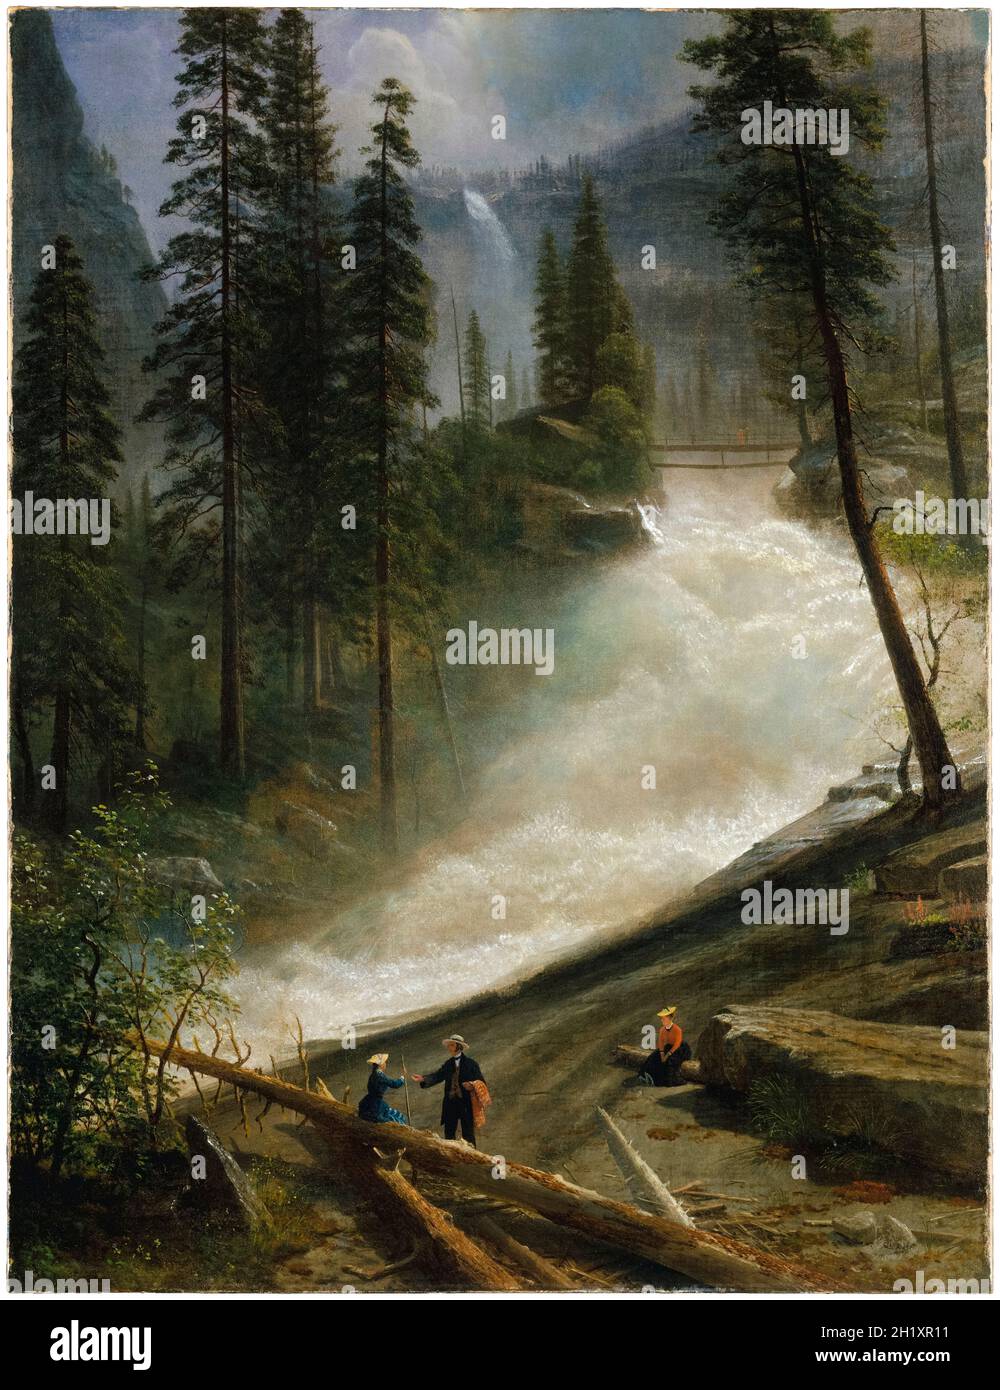 Albert Bierstadt, peinture de paysage, Nevada Falls, Yosemite, 1872-1873 Banque D'Images